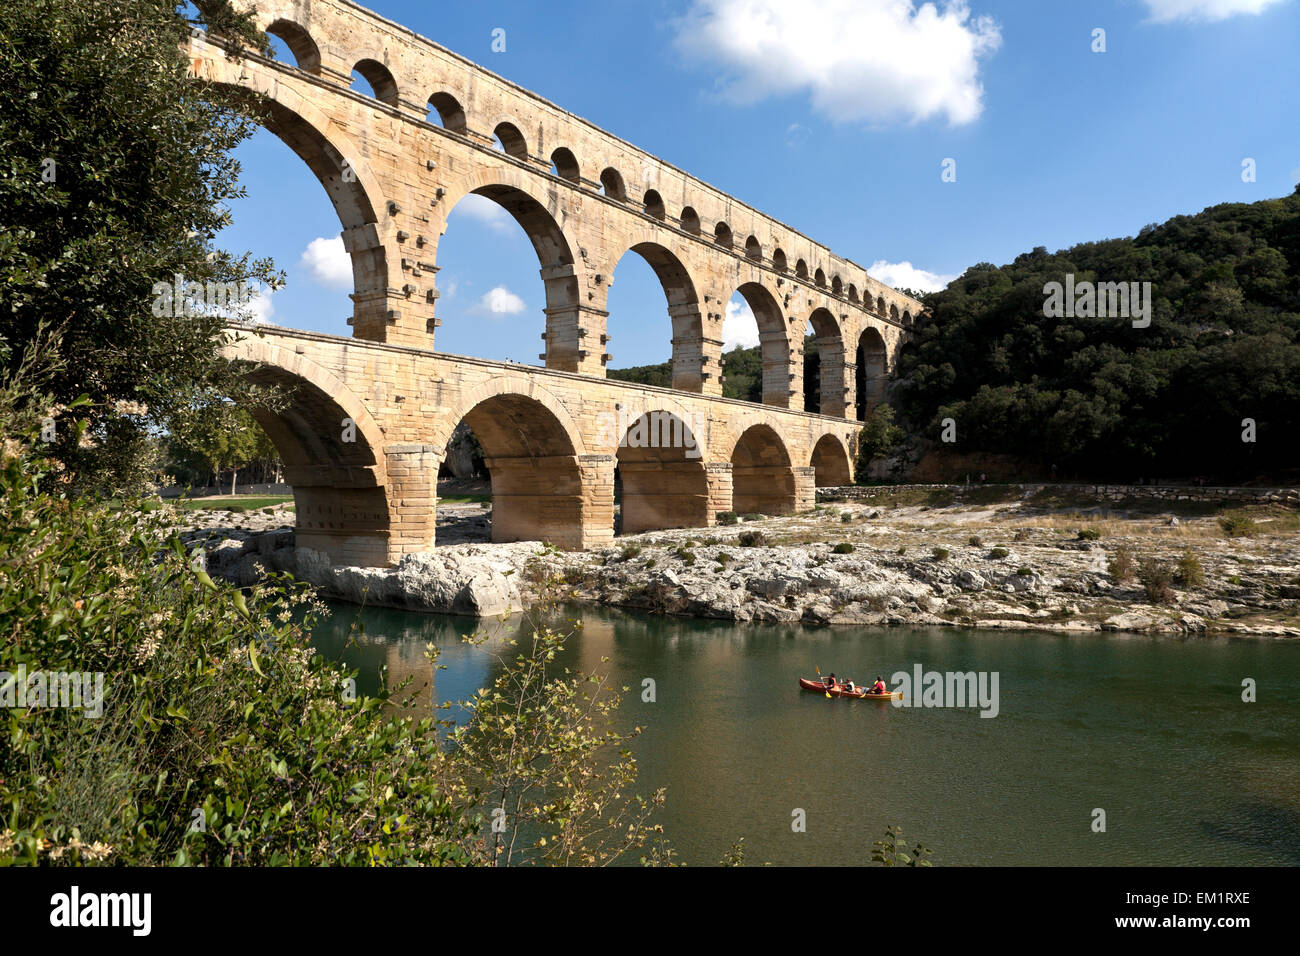 Pont du Gard Roman aqueduct, Provence, France Stock Photo - Alamy